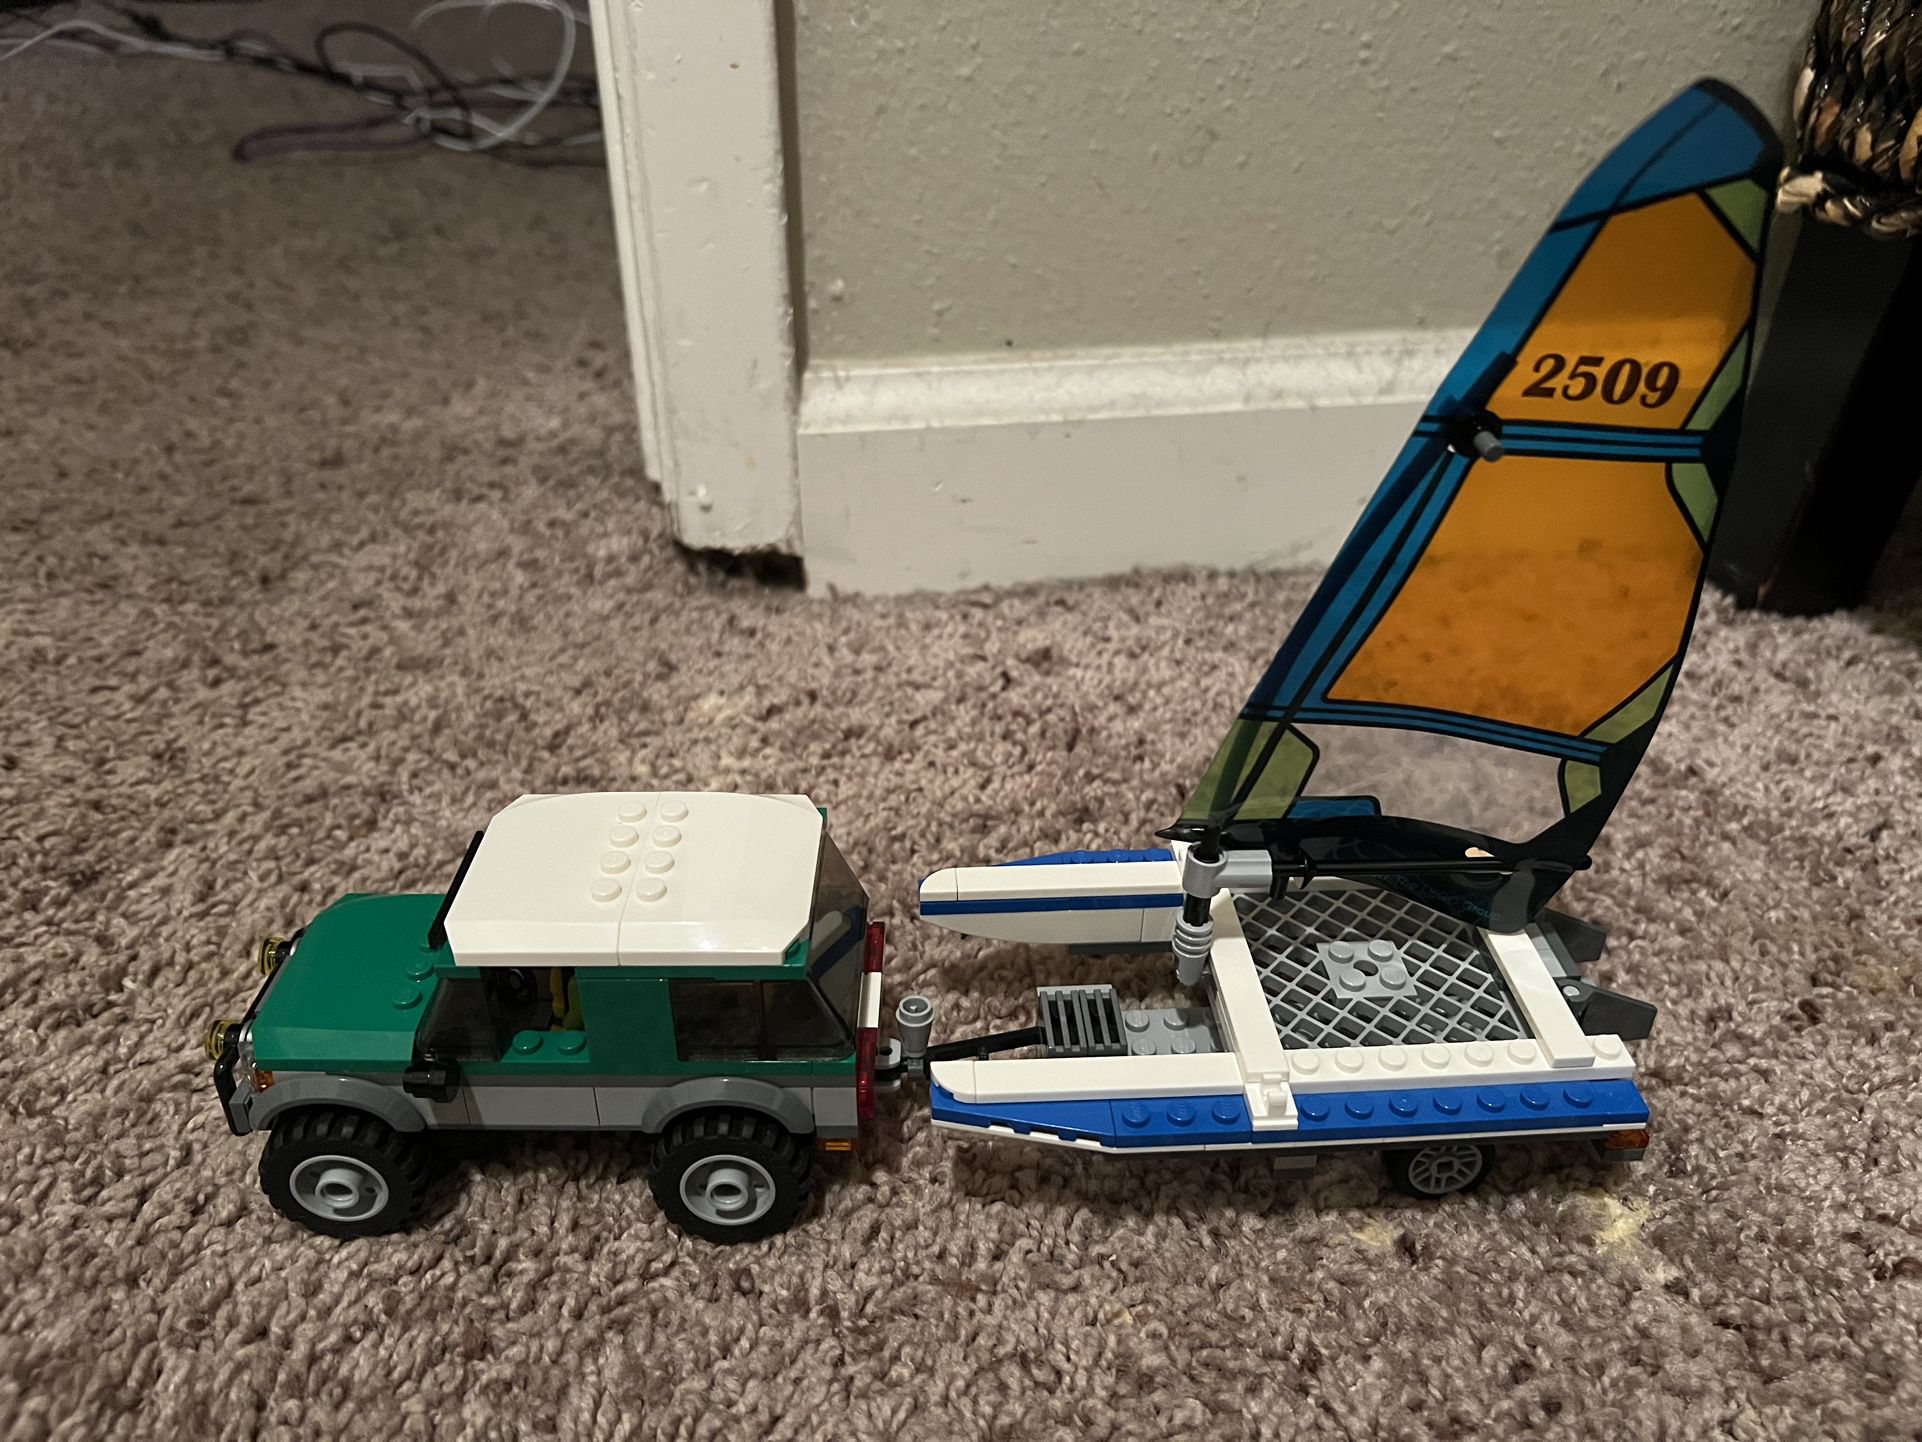 Lego SUV And Sailboat?